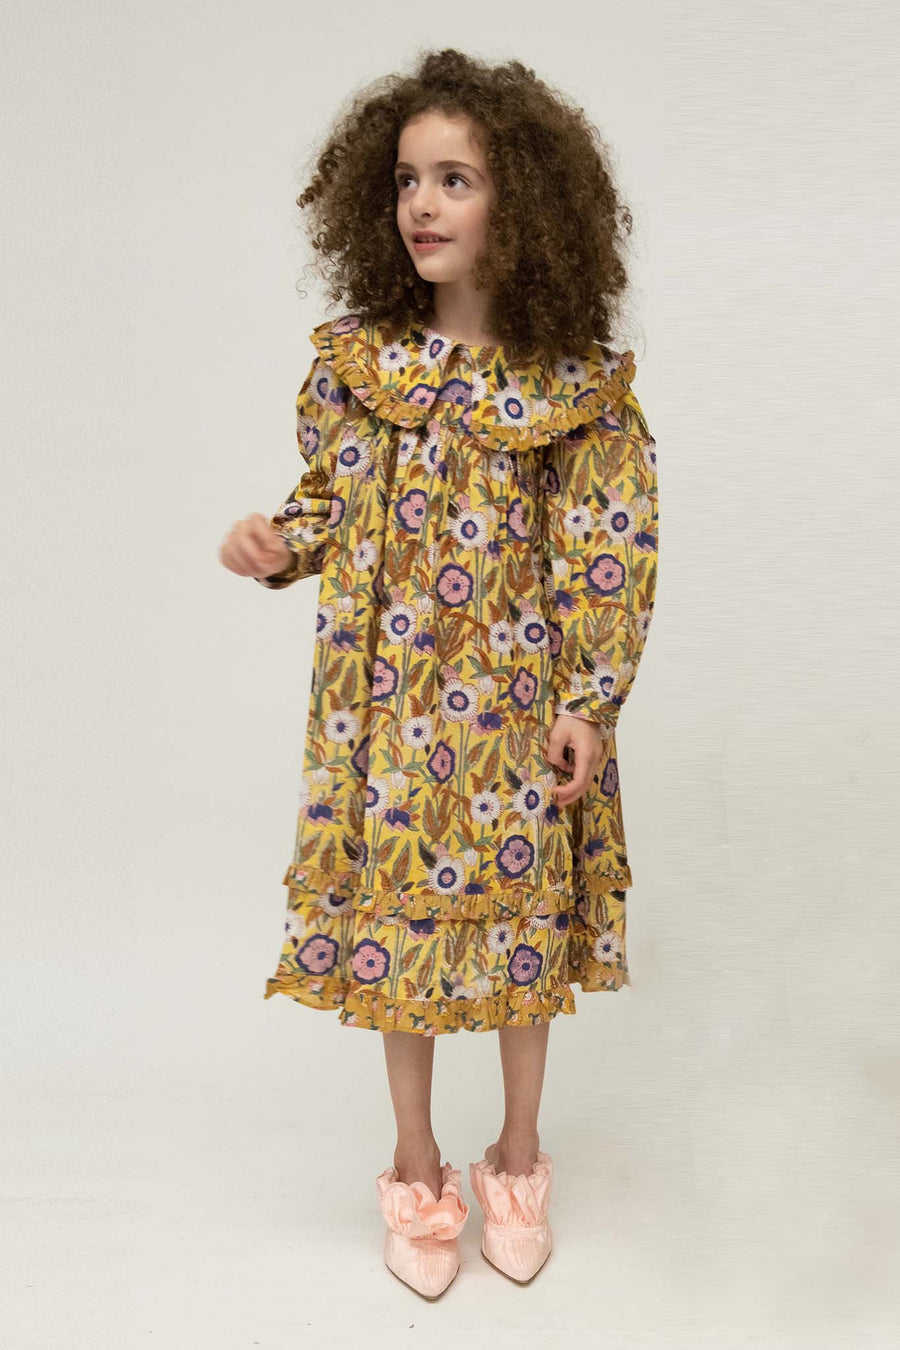 JABELLA FLEUR X BATSHEVA Marigold Poppy Kid's Dress